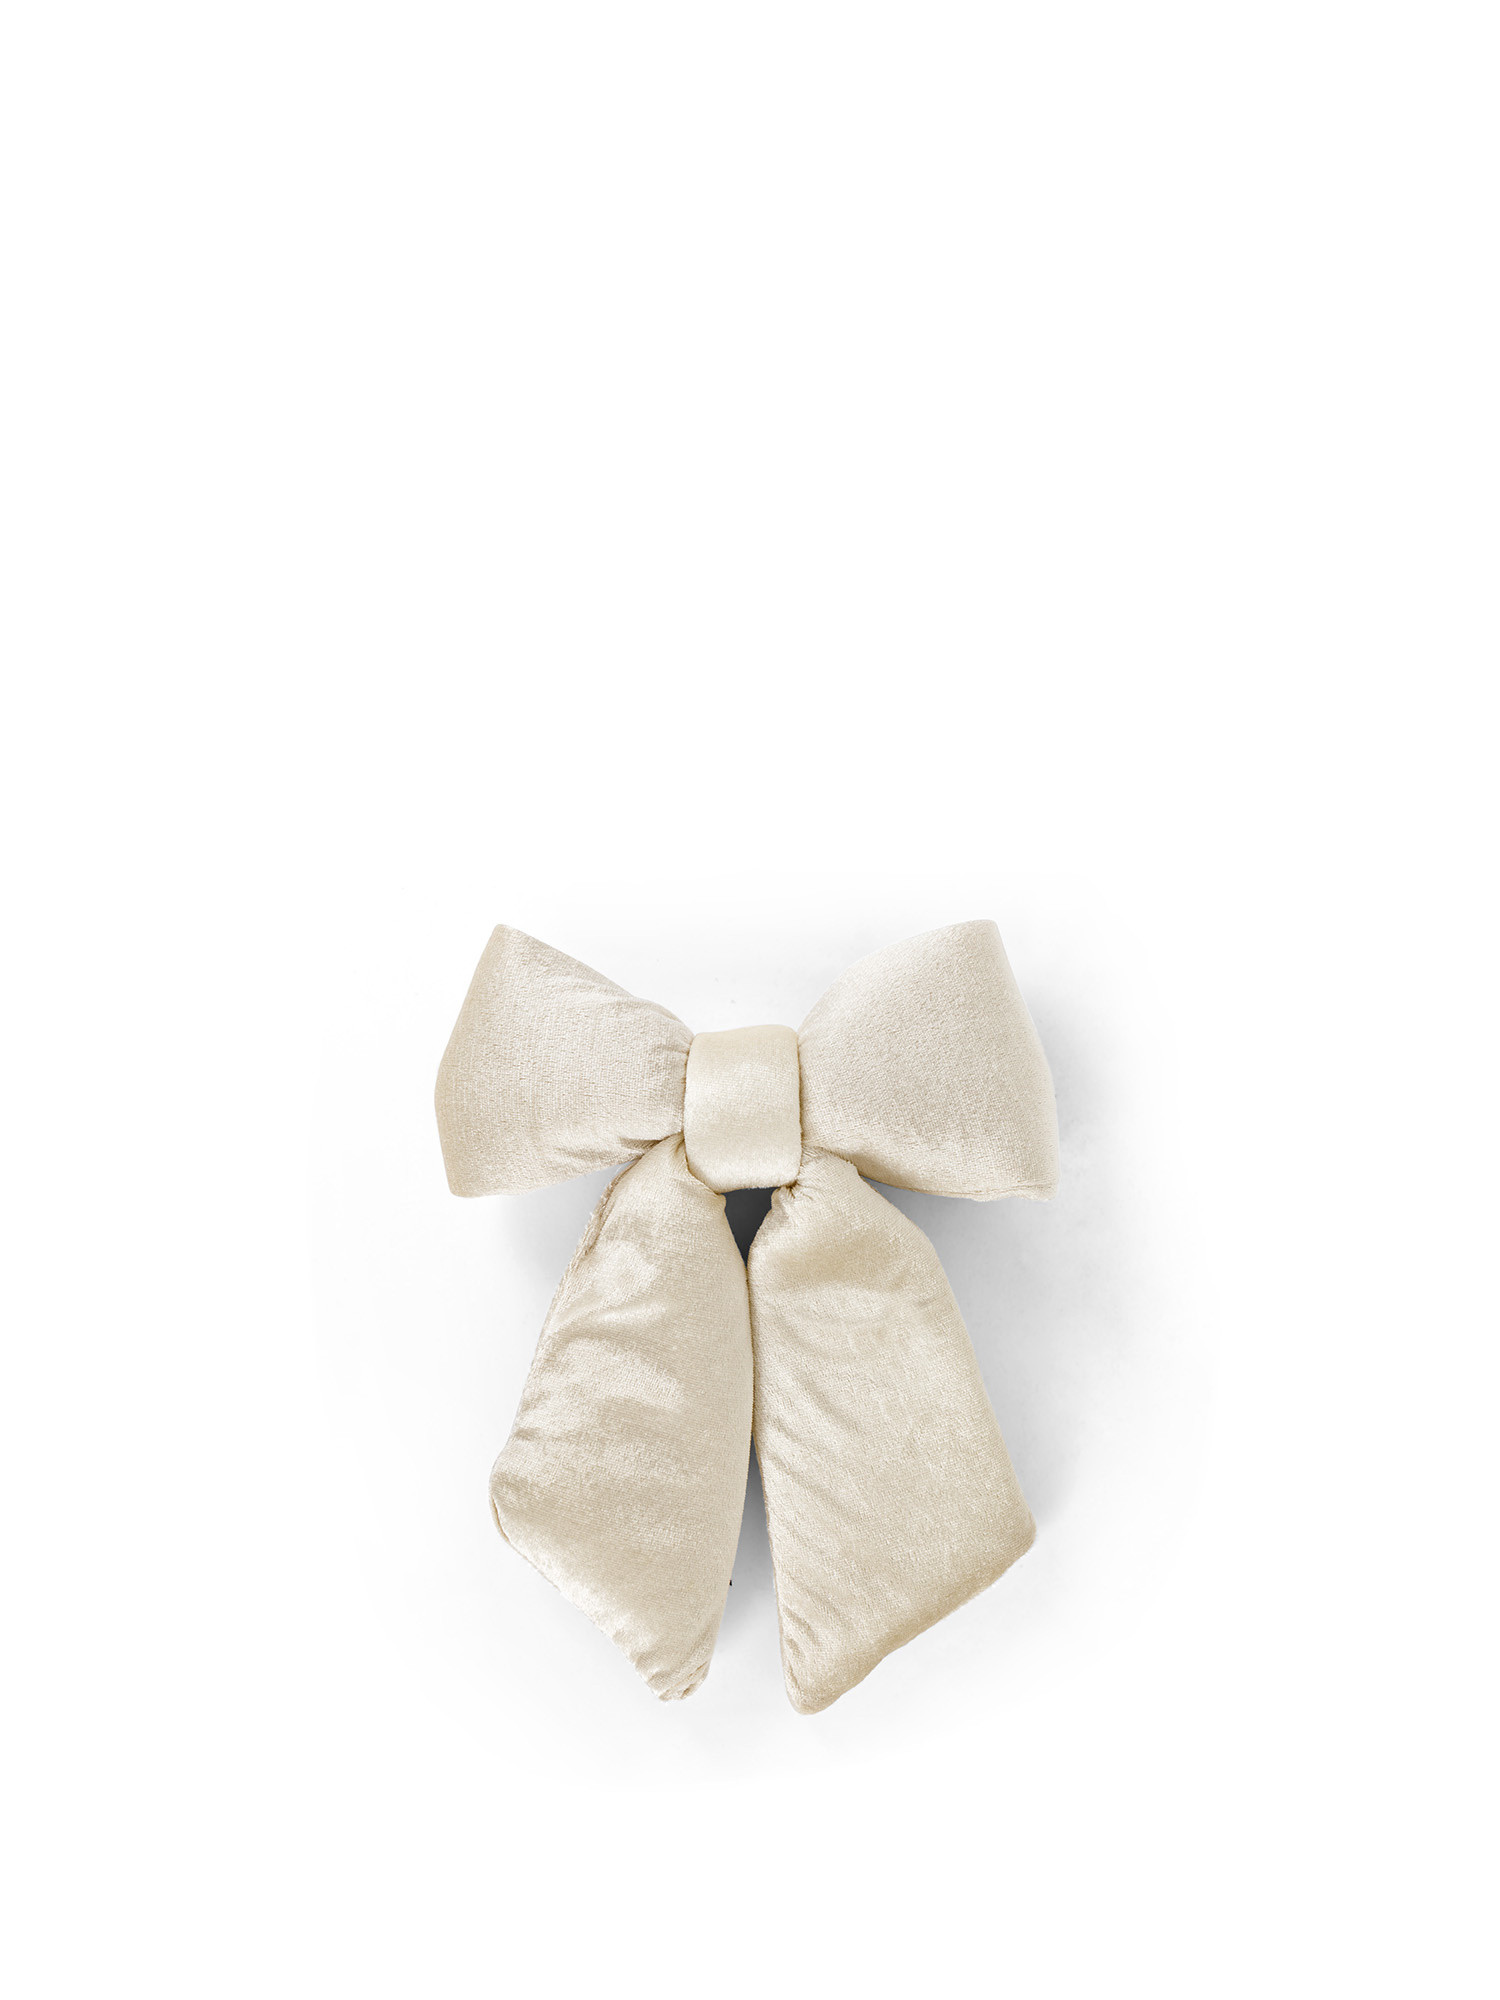 Decorative velvet bow, White 1, large image number 0